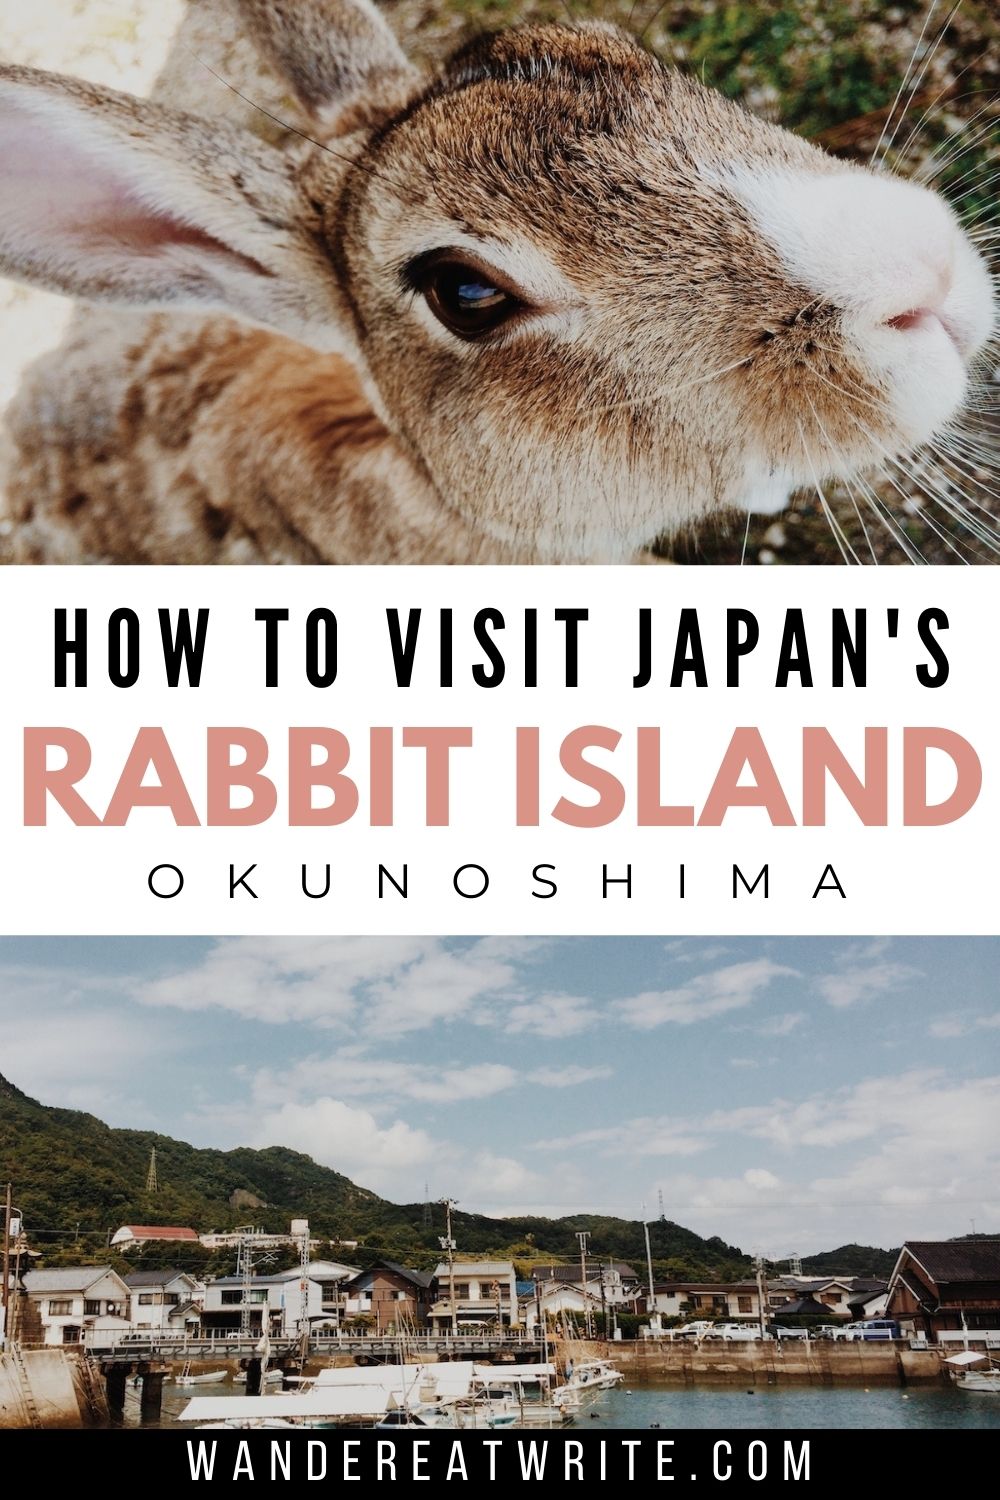 Text: How to visit Japan's Rabbit Island Okunoshima; Pictures: a closeup photo of a light brown rabbit and the Tadanoumi Port